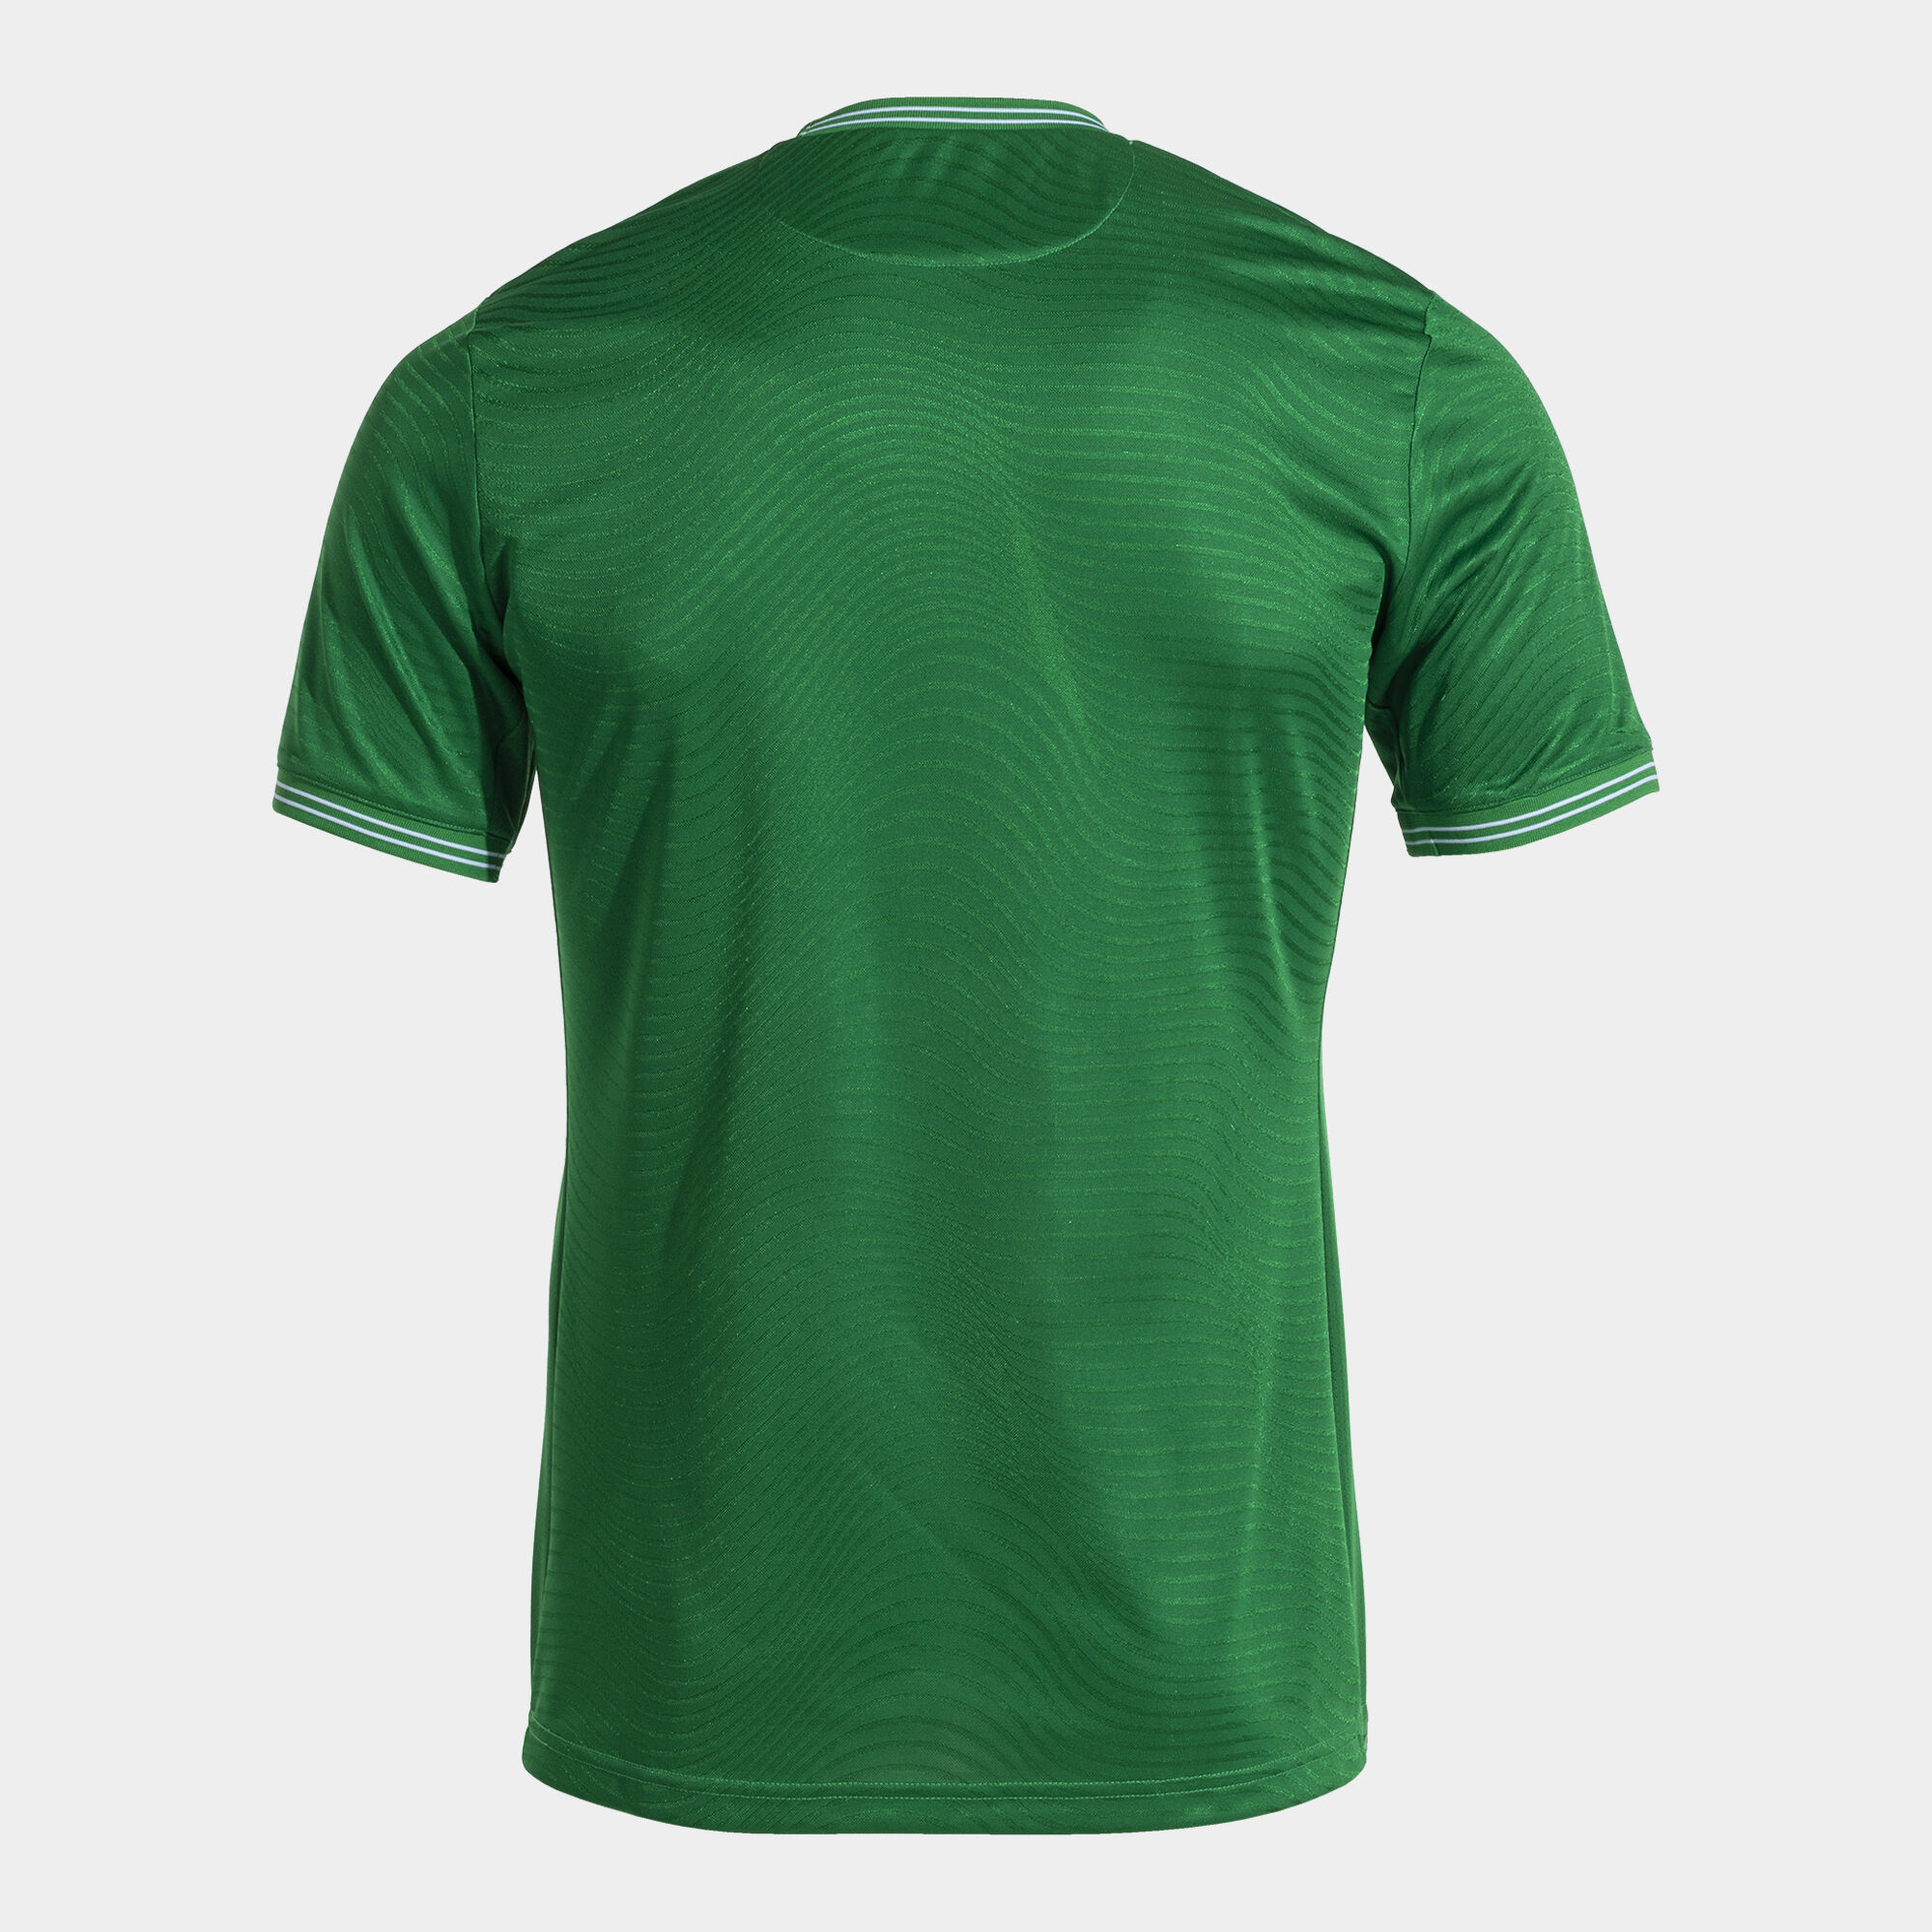 Camiseta manga corta hombre Toletum V verde